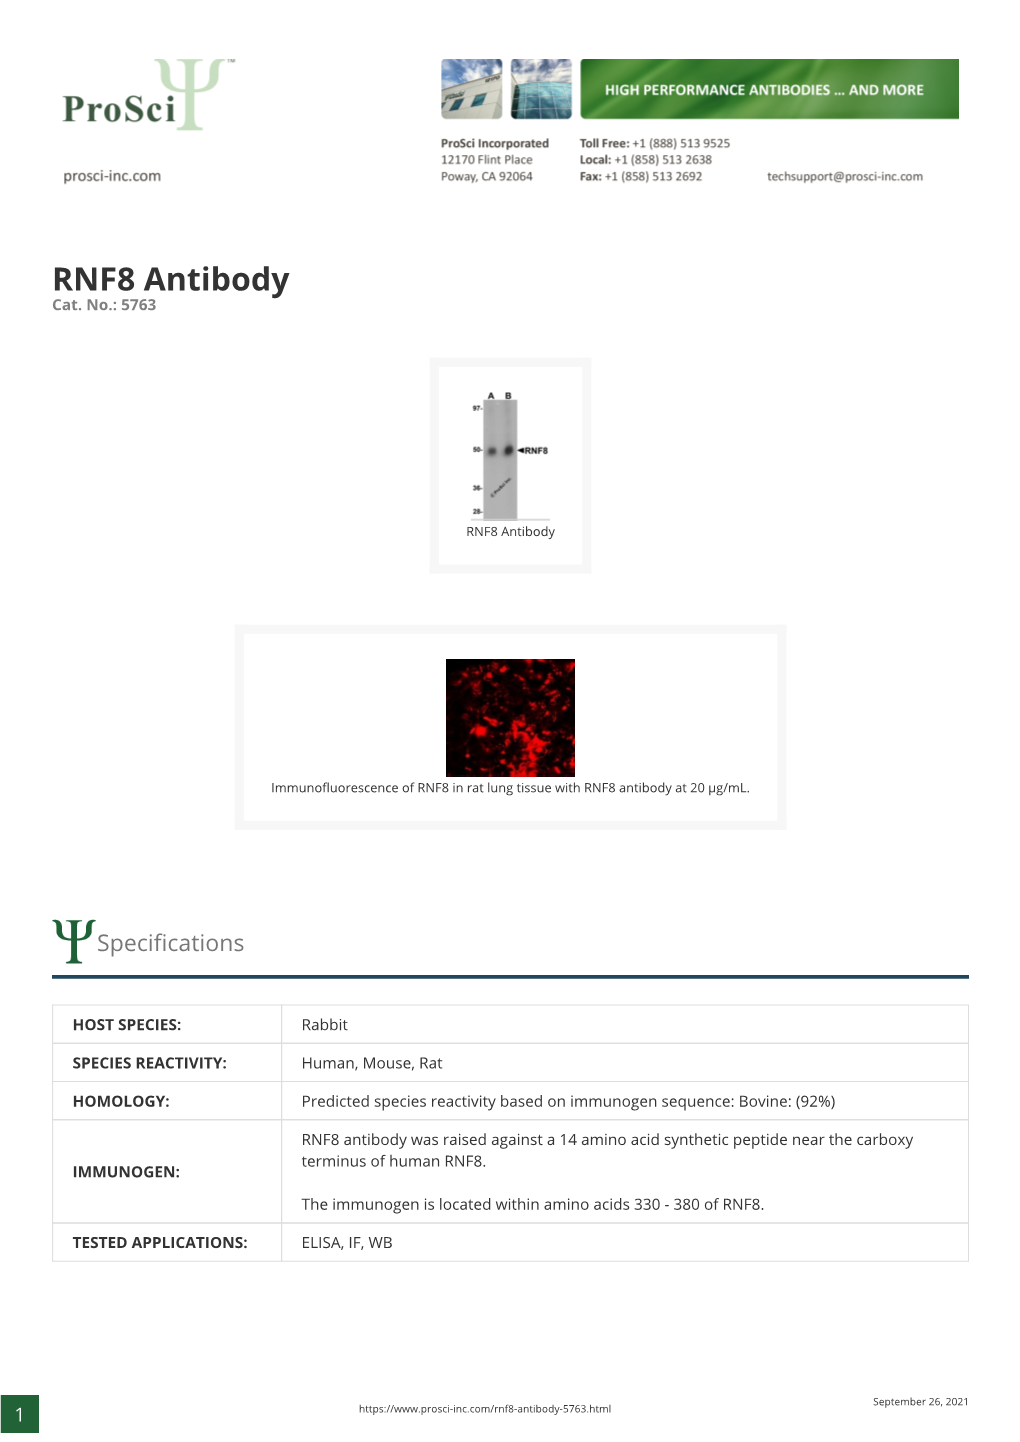 RNF8 Antibody Cat